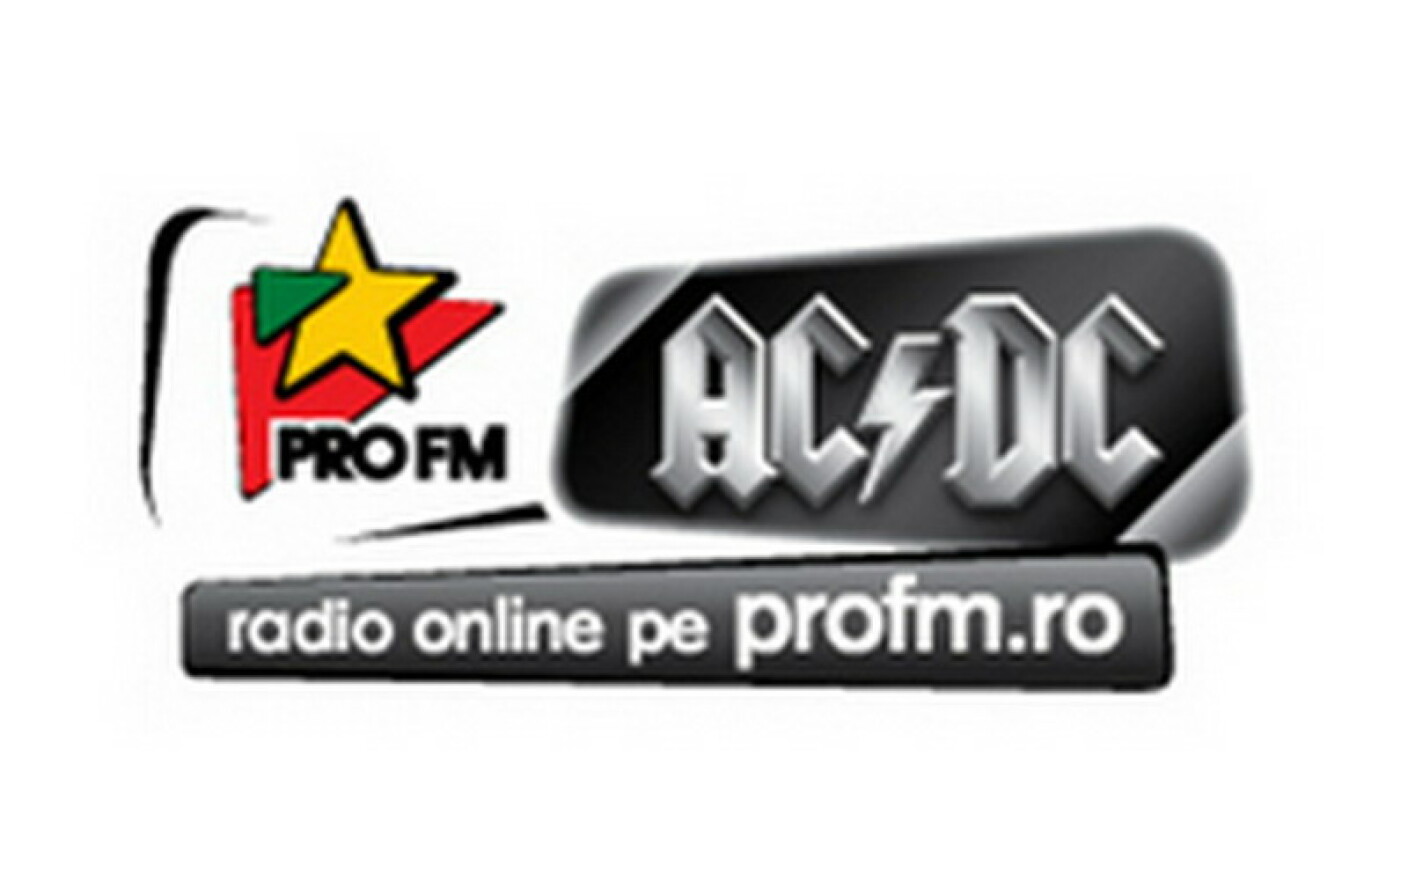 Sudan assembly Someday AC/DC non-stop, pentru fanii romani. Pe profm.ro s-a bagat T.N.T! -  Stirileprotv.ro